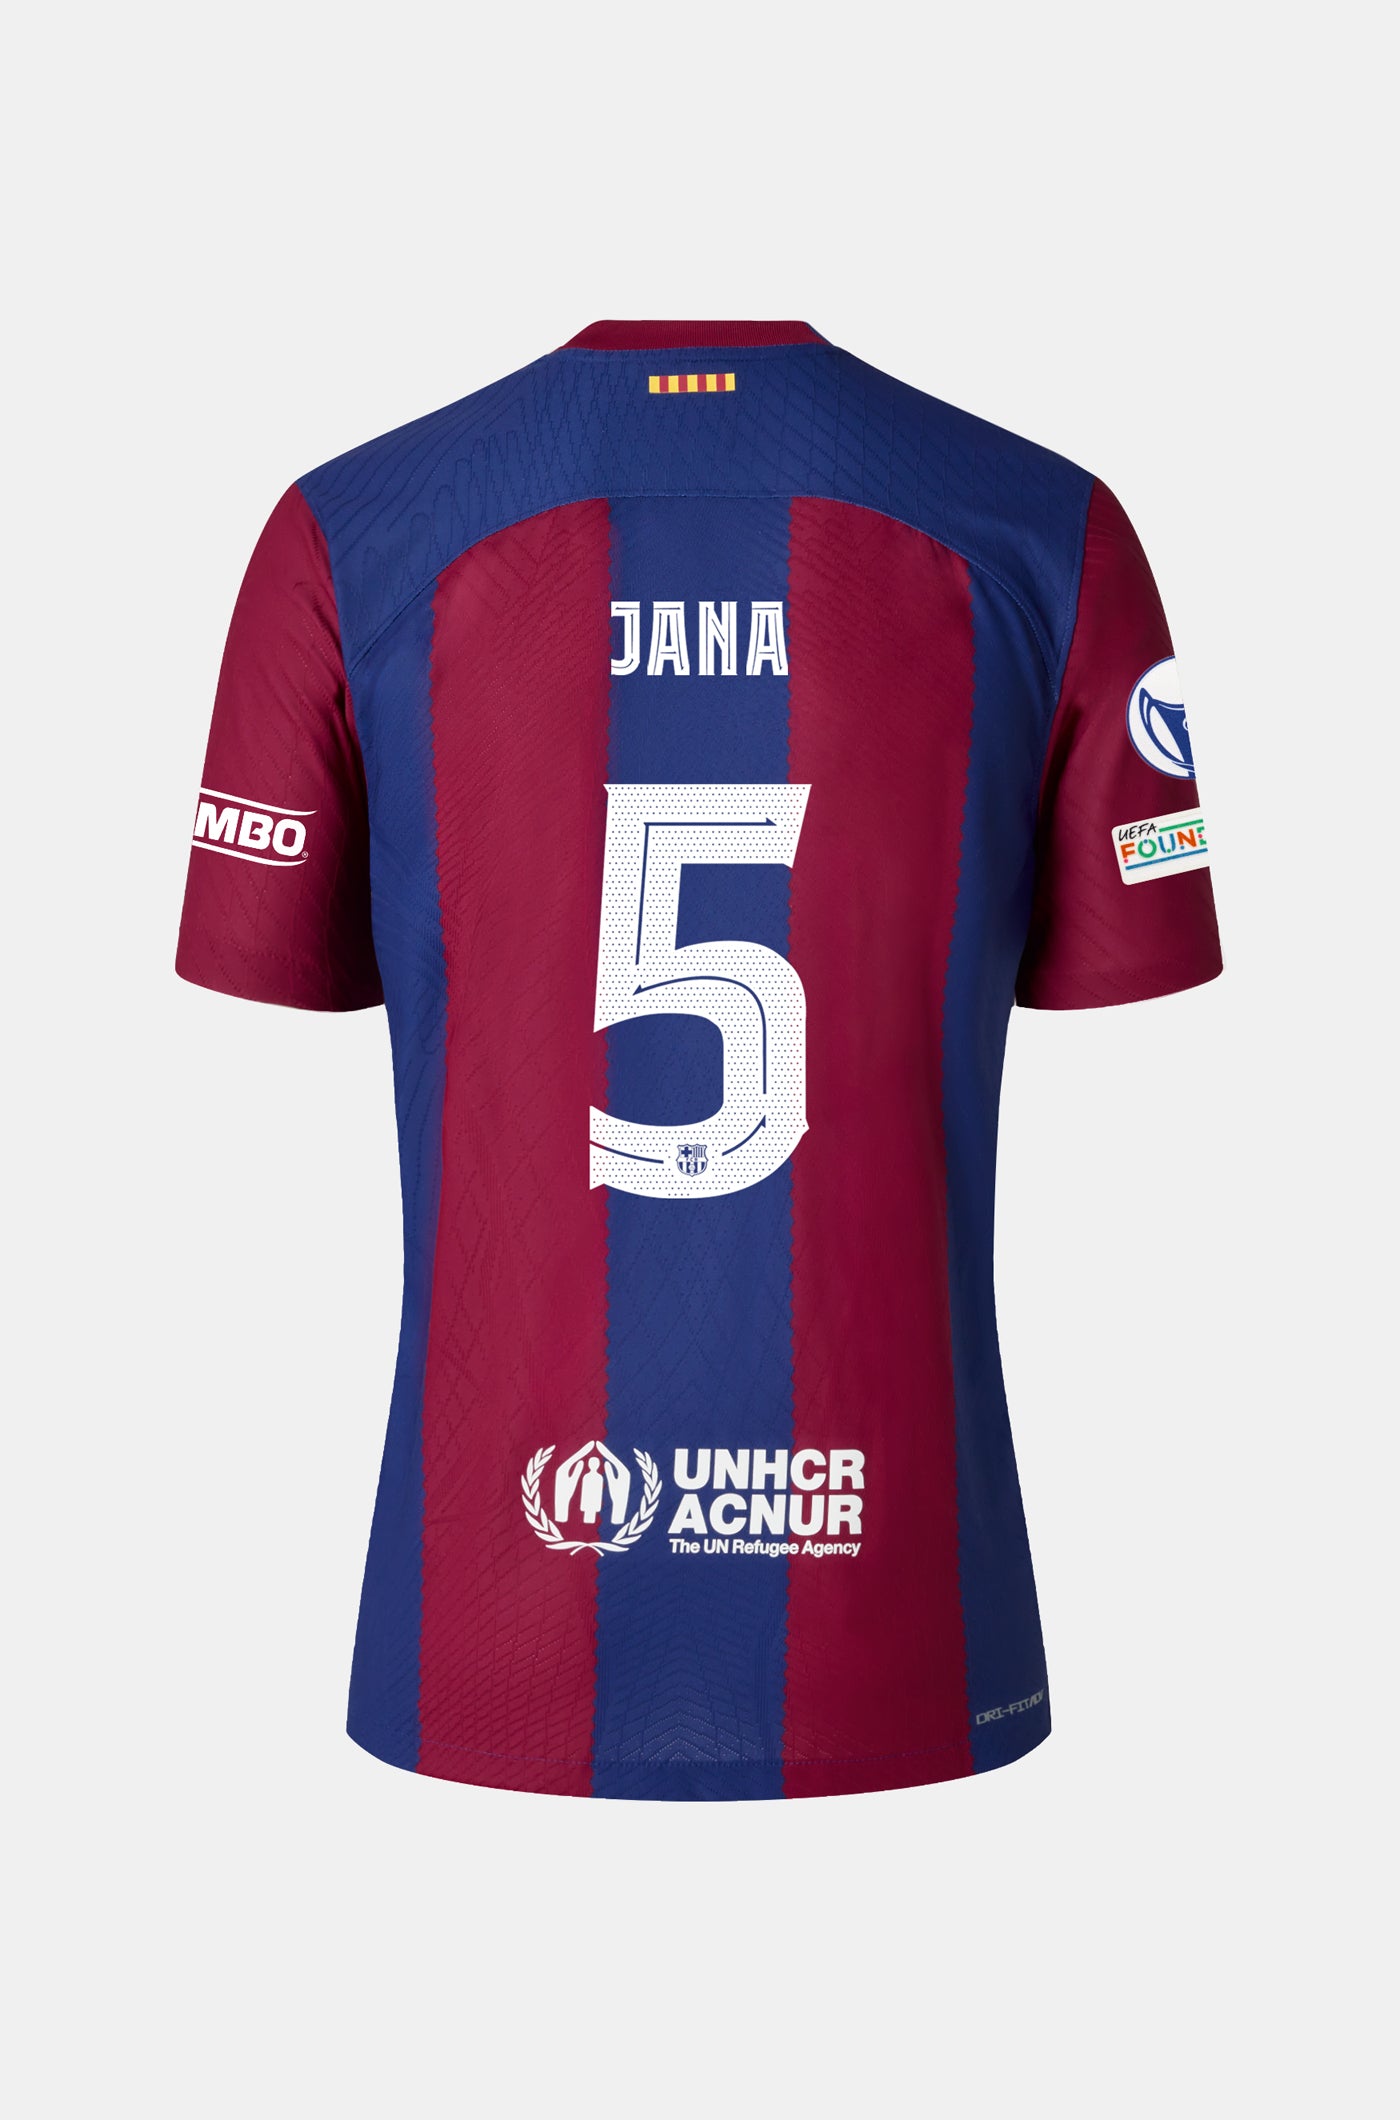 UWCL FC Barcelona home shirt 23/24 Player's Edition  - JANA